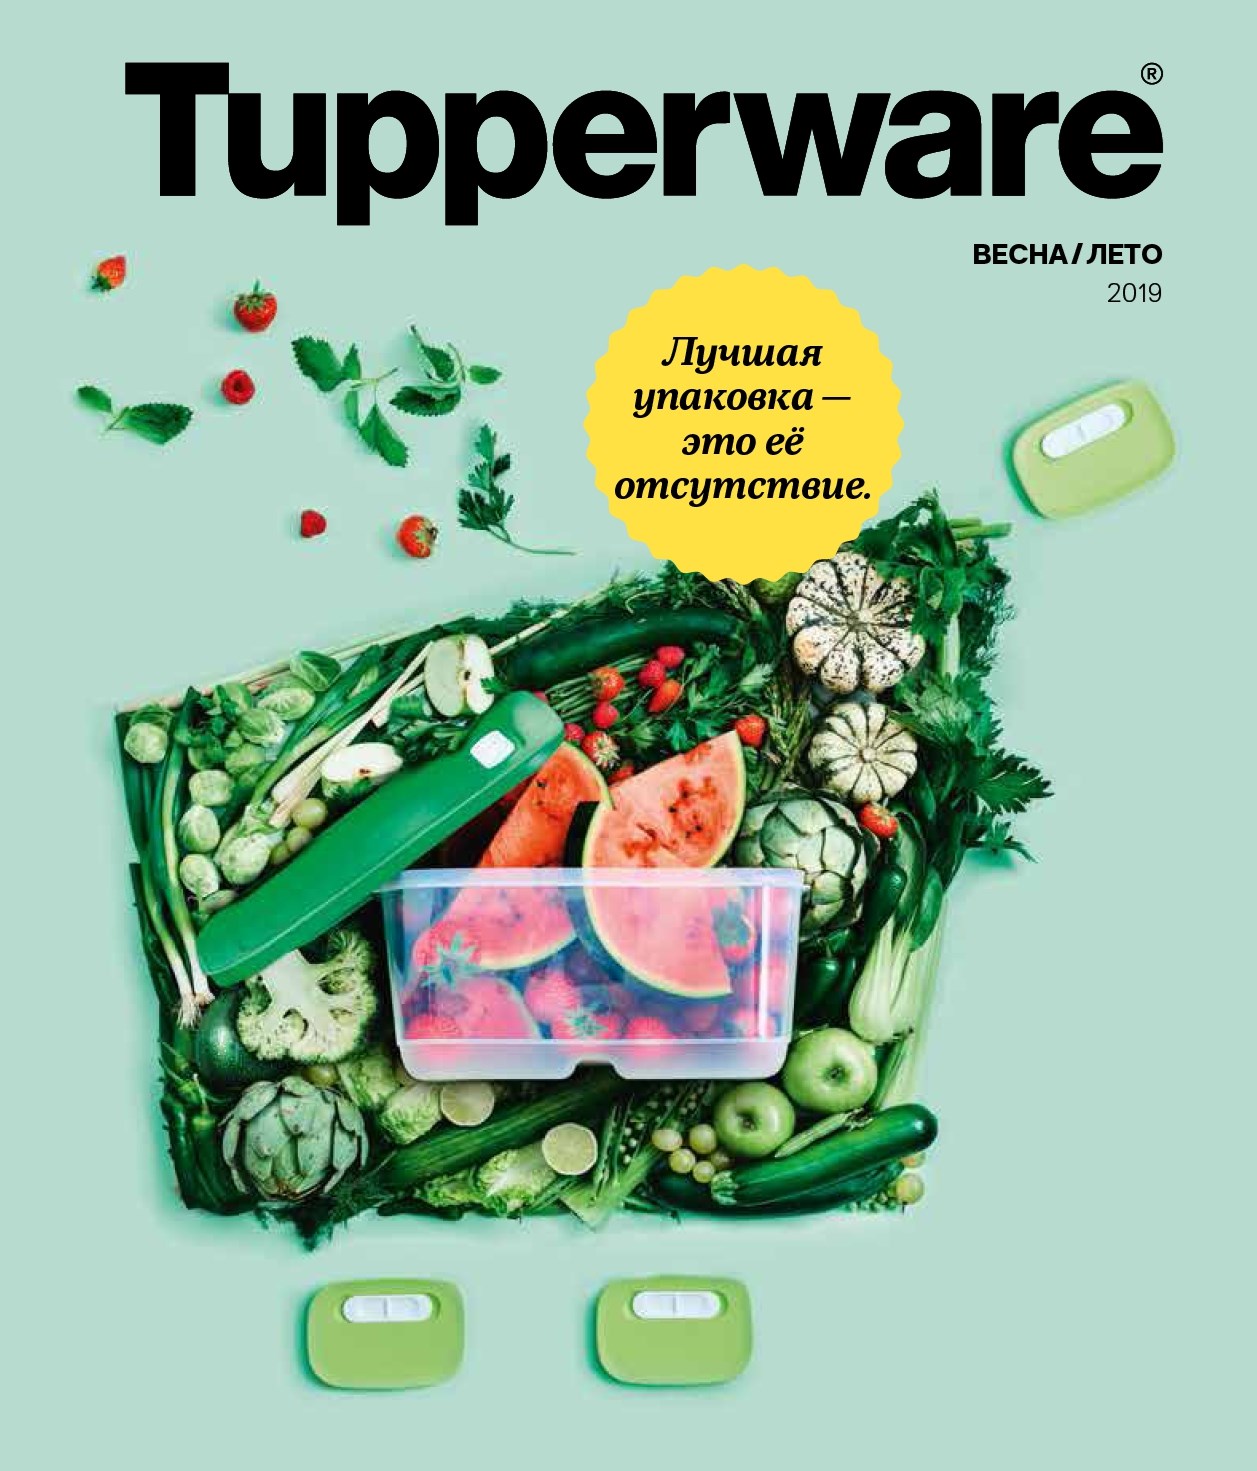  .Tupperware -     .  1/2019